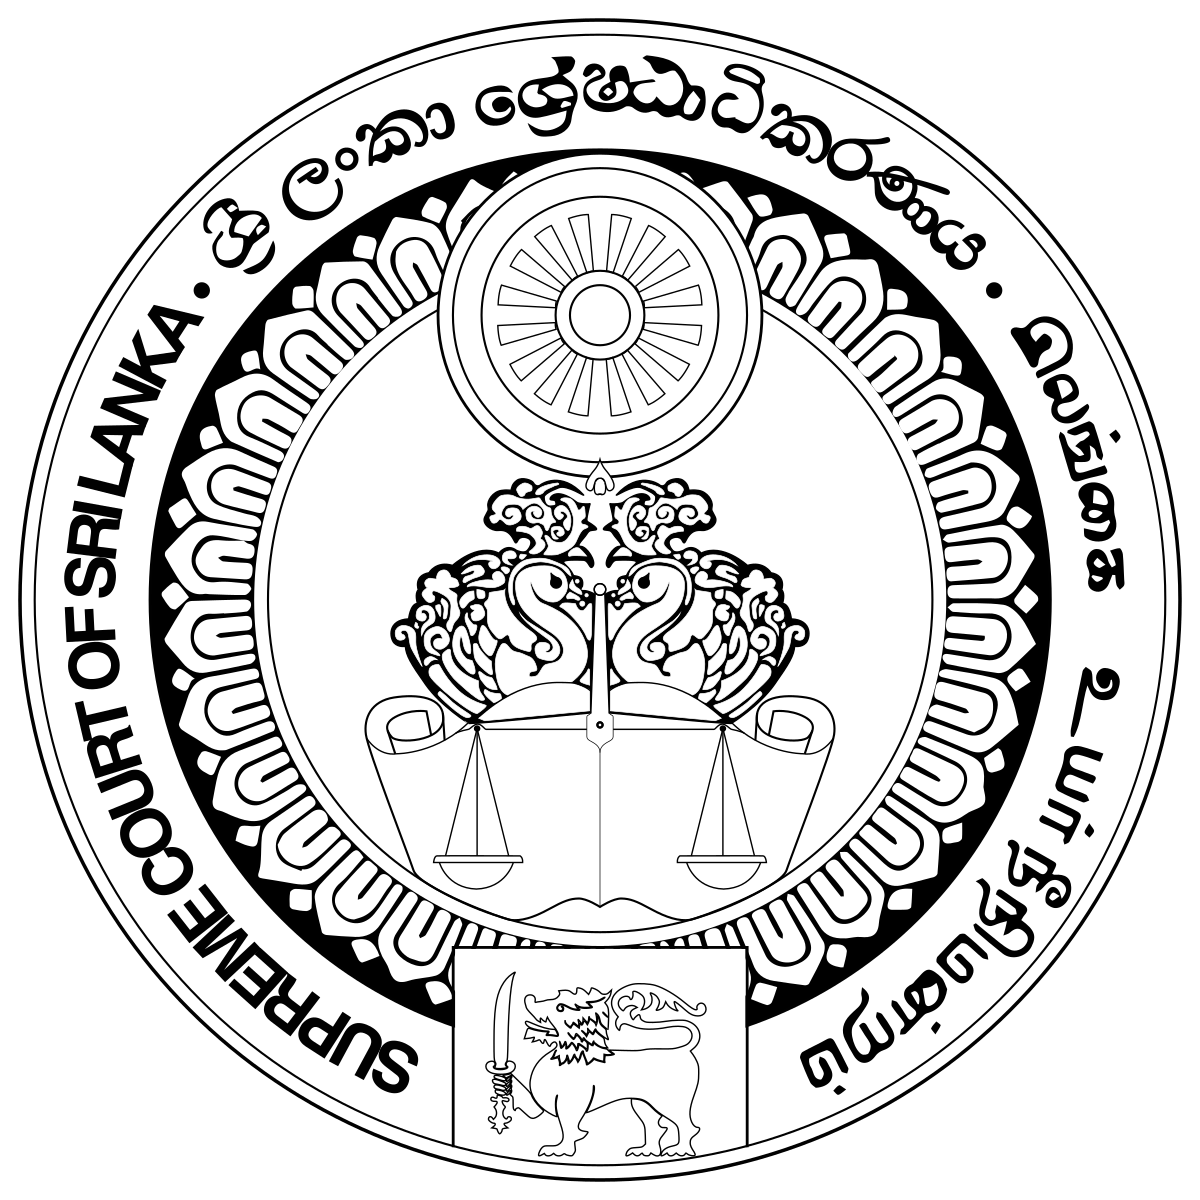 Supreme Supreme Court with Logo - Supreme Court of Sri Lanka